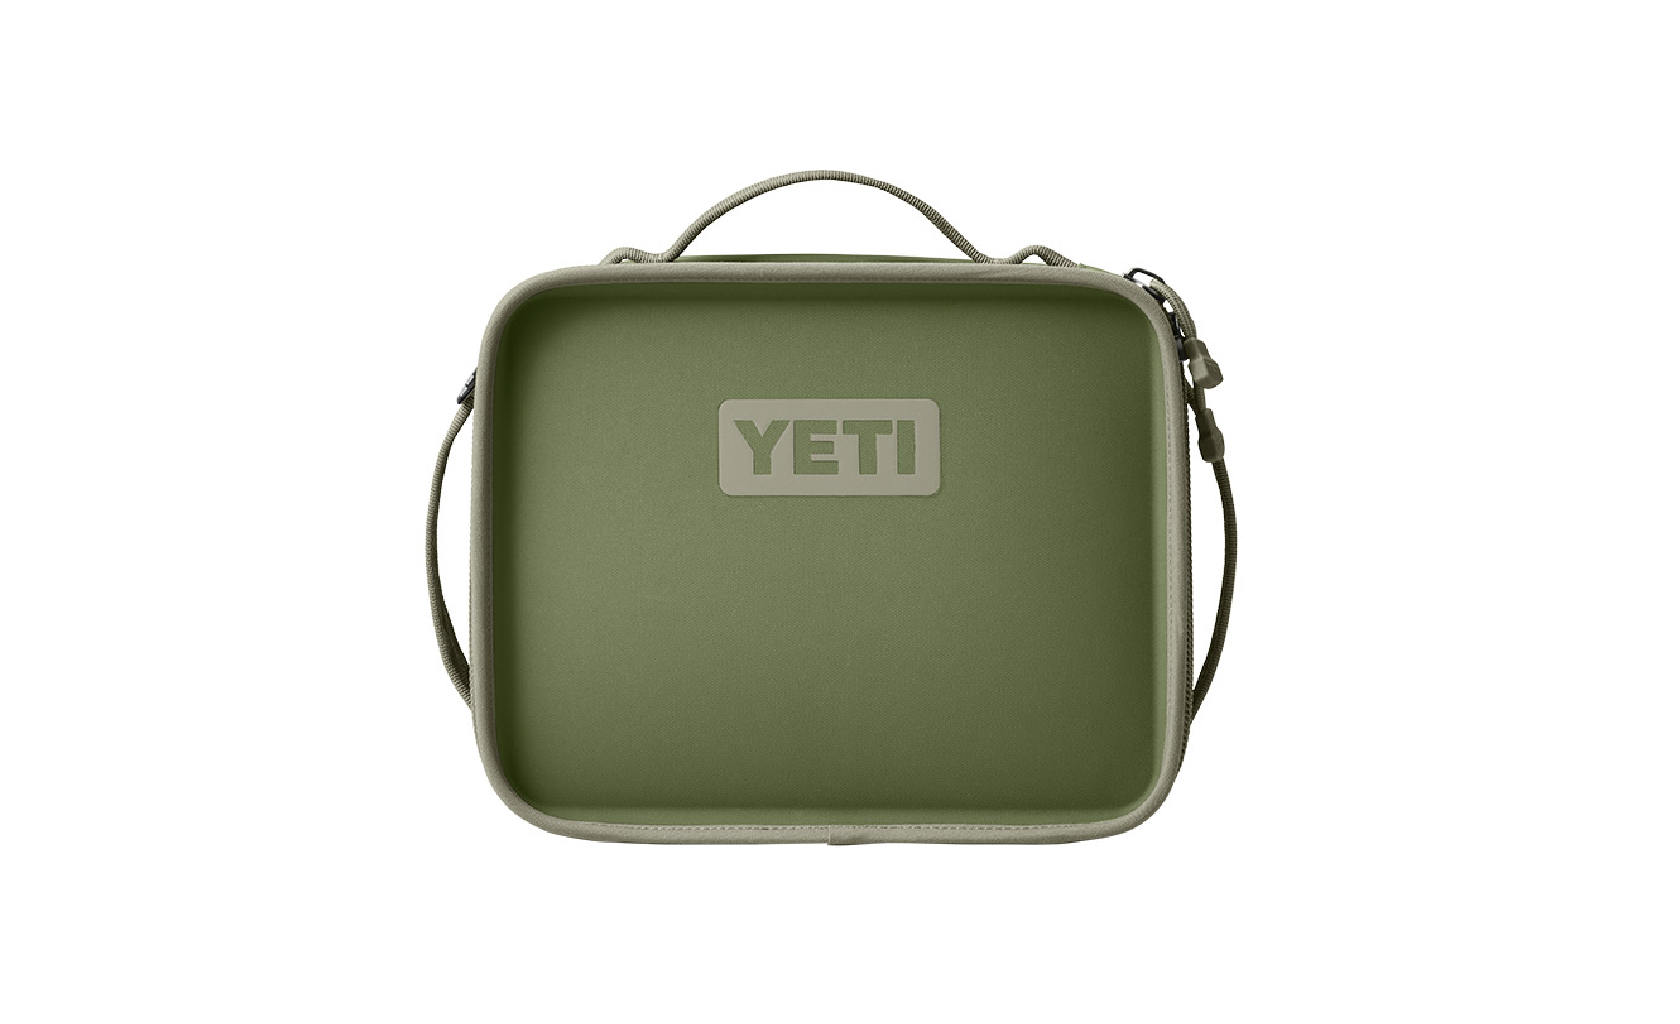 YETI Daytrip Canopy Green 5 qt Lunch Box Cooler